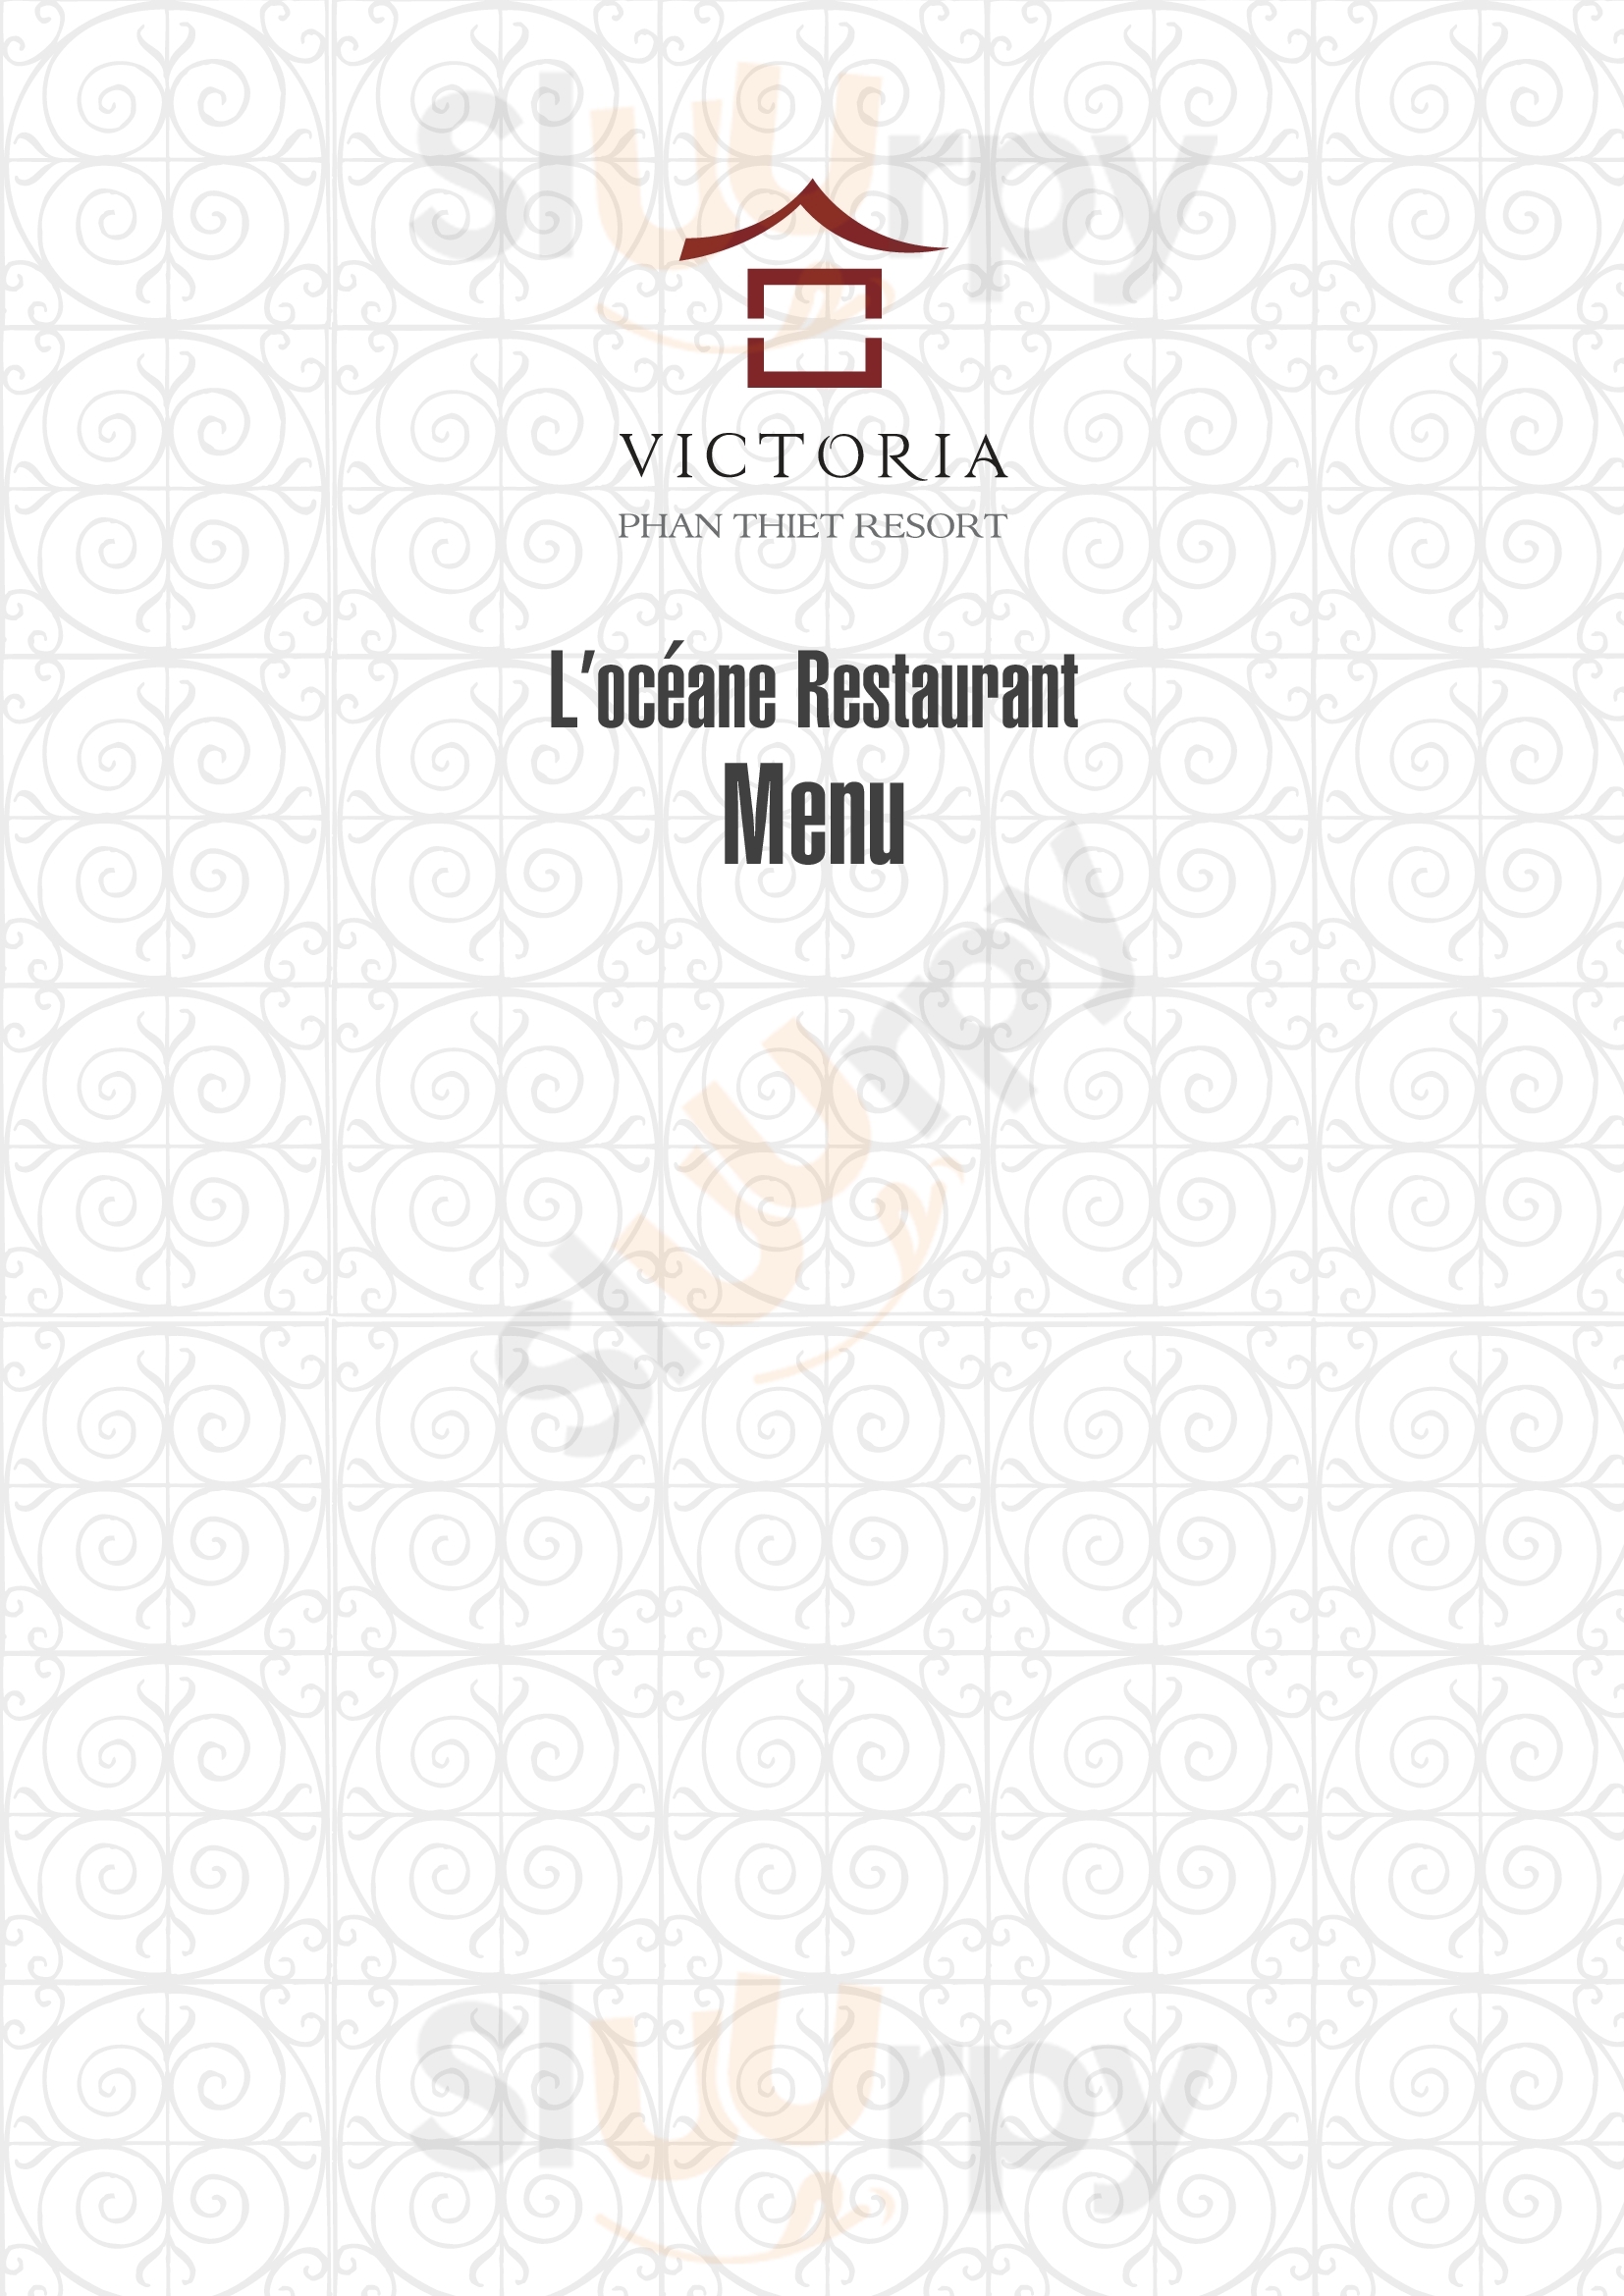 L'oceane Restaurant (victoria Phan Thiet) Phan Thiết Menu - 1